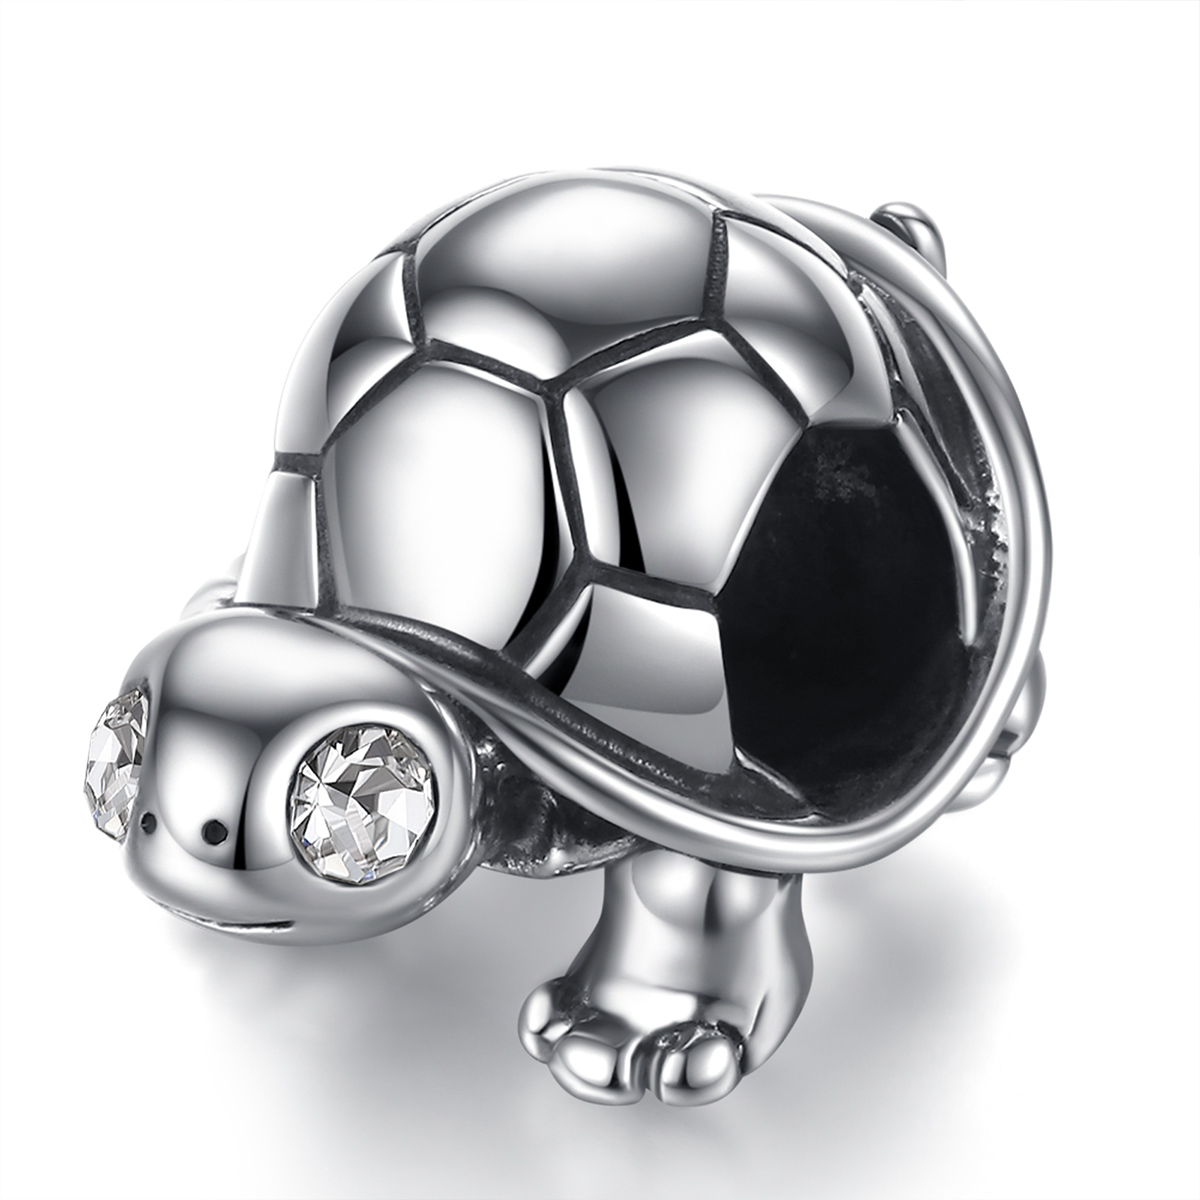 Merryshine jewelry in bulk 925 sterling silver animal element cute tortoise land turtle design bracelet charms